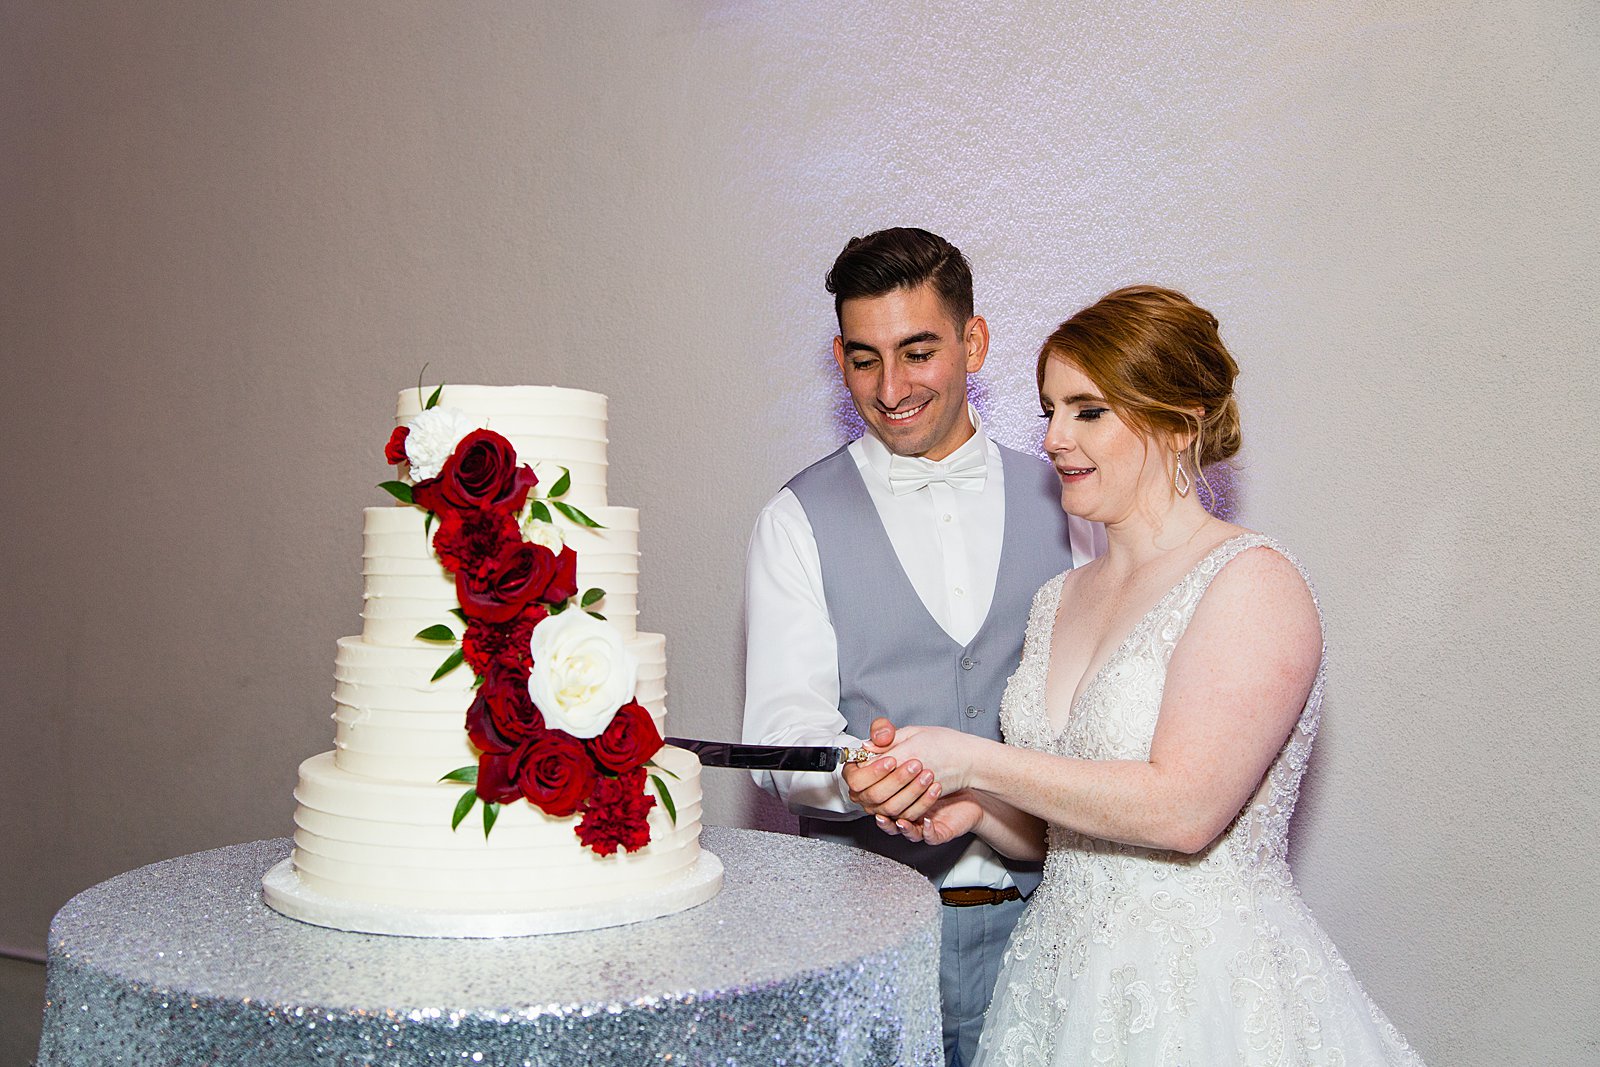 Bride and Groom cutting their wedding cake at their SoHo63 wedding reception by Arizona wedding photographer PMA Photography.